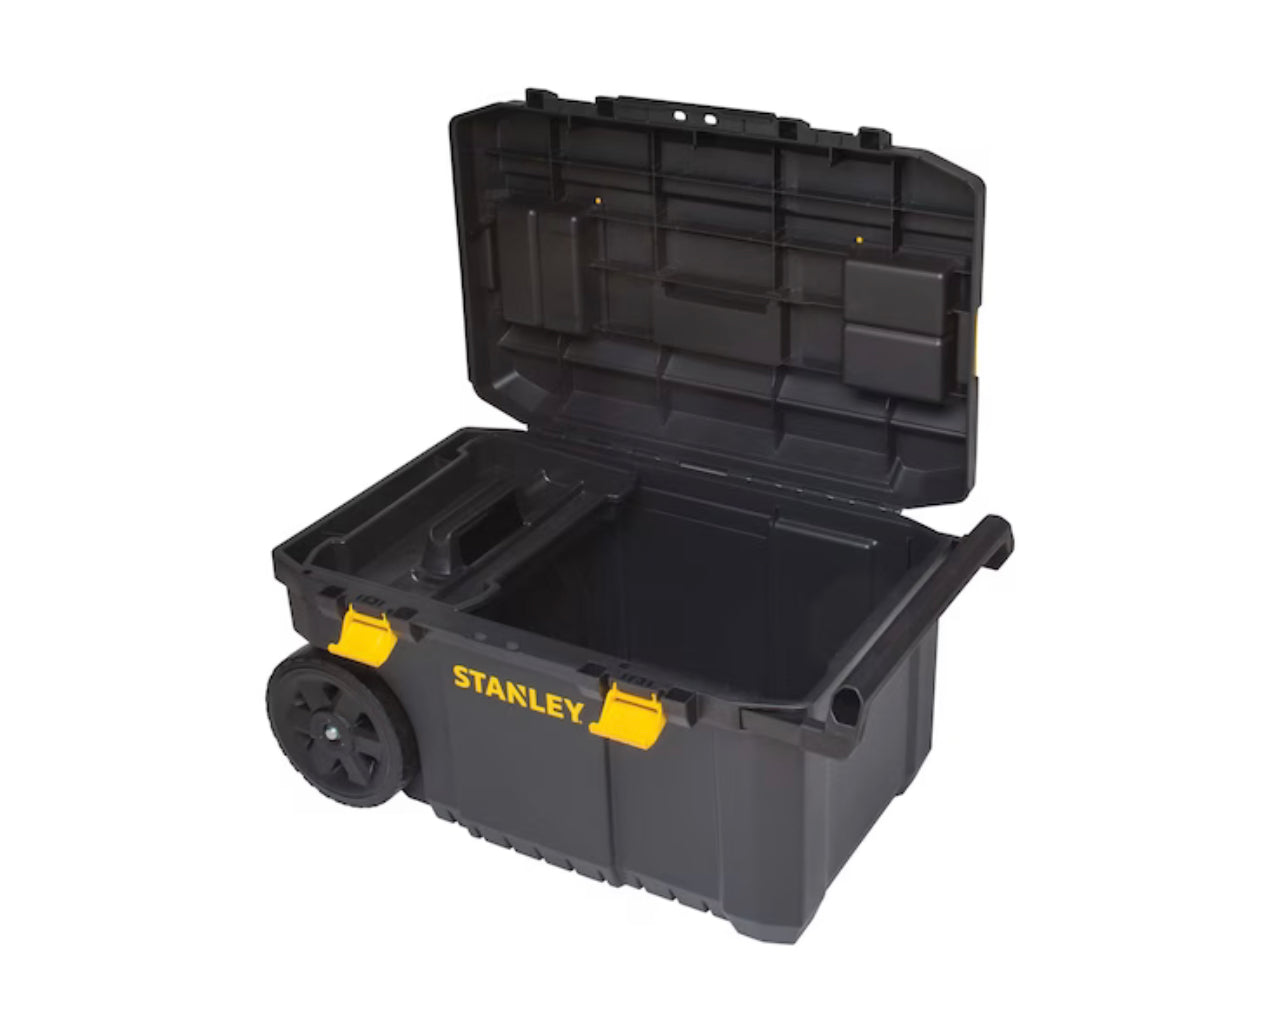 Stanley 13 Gallon Mobile Storage Chest